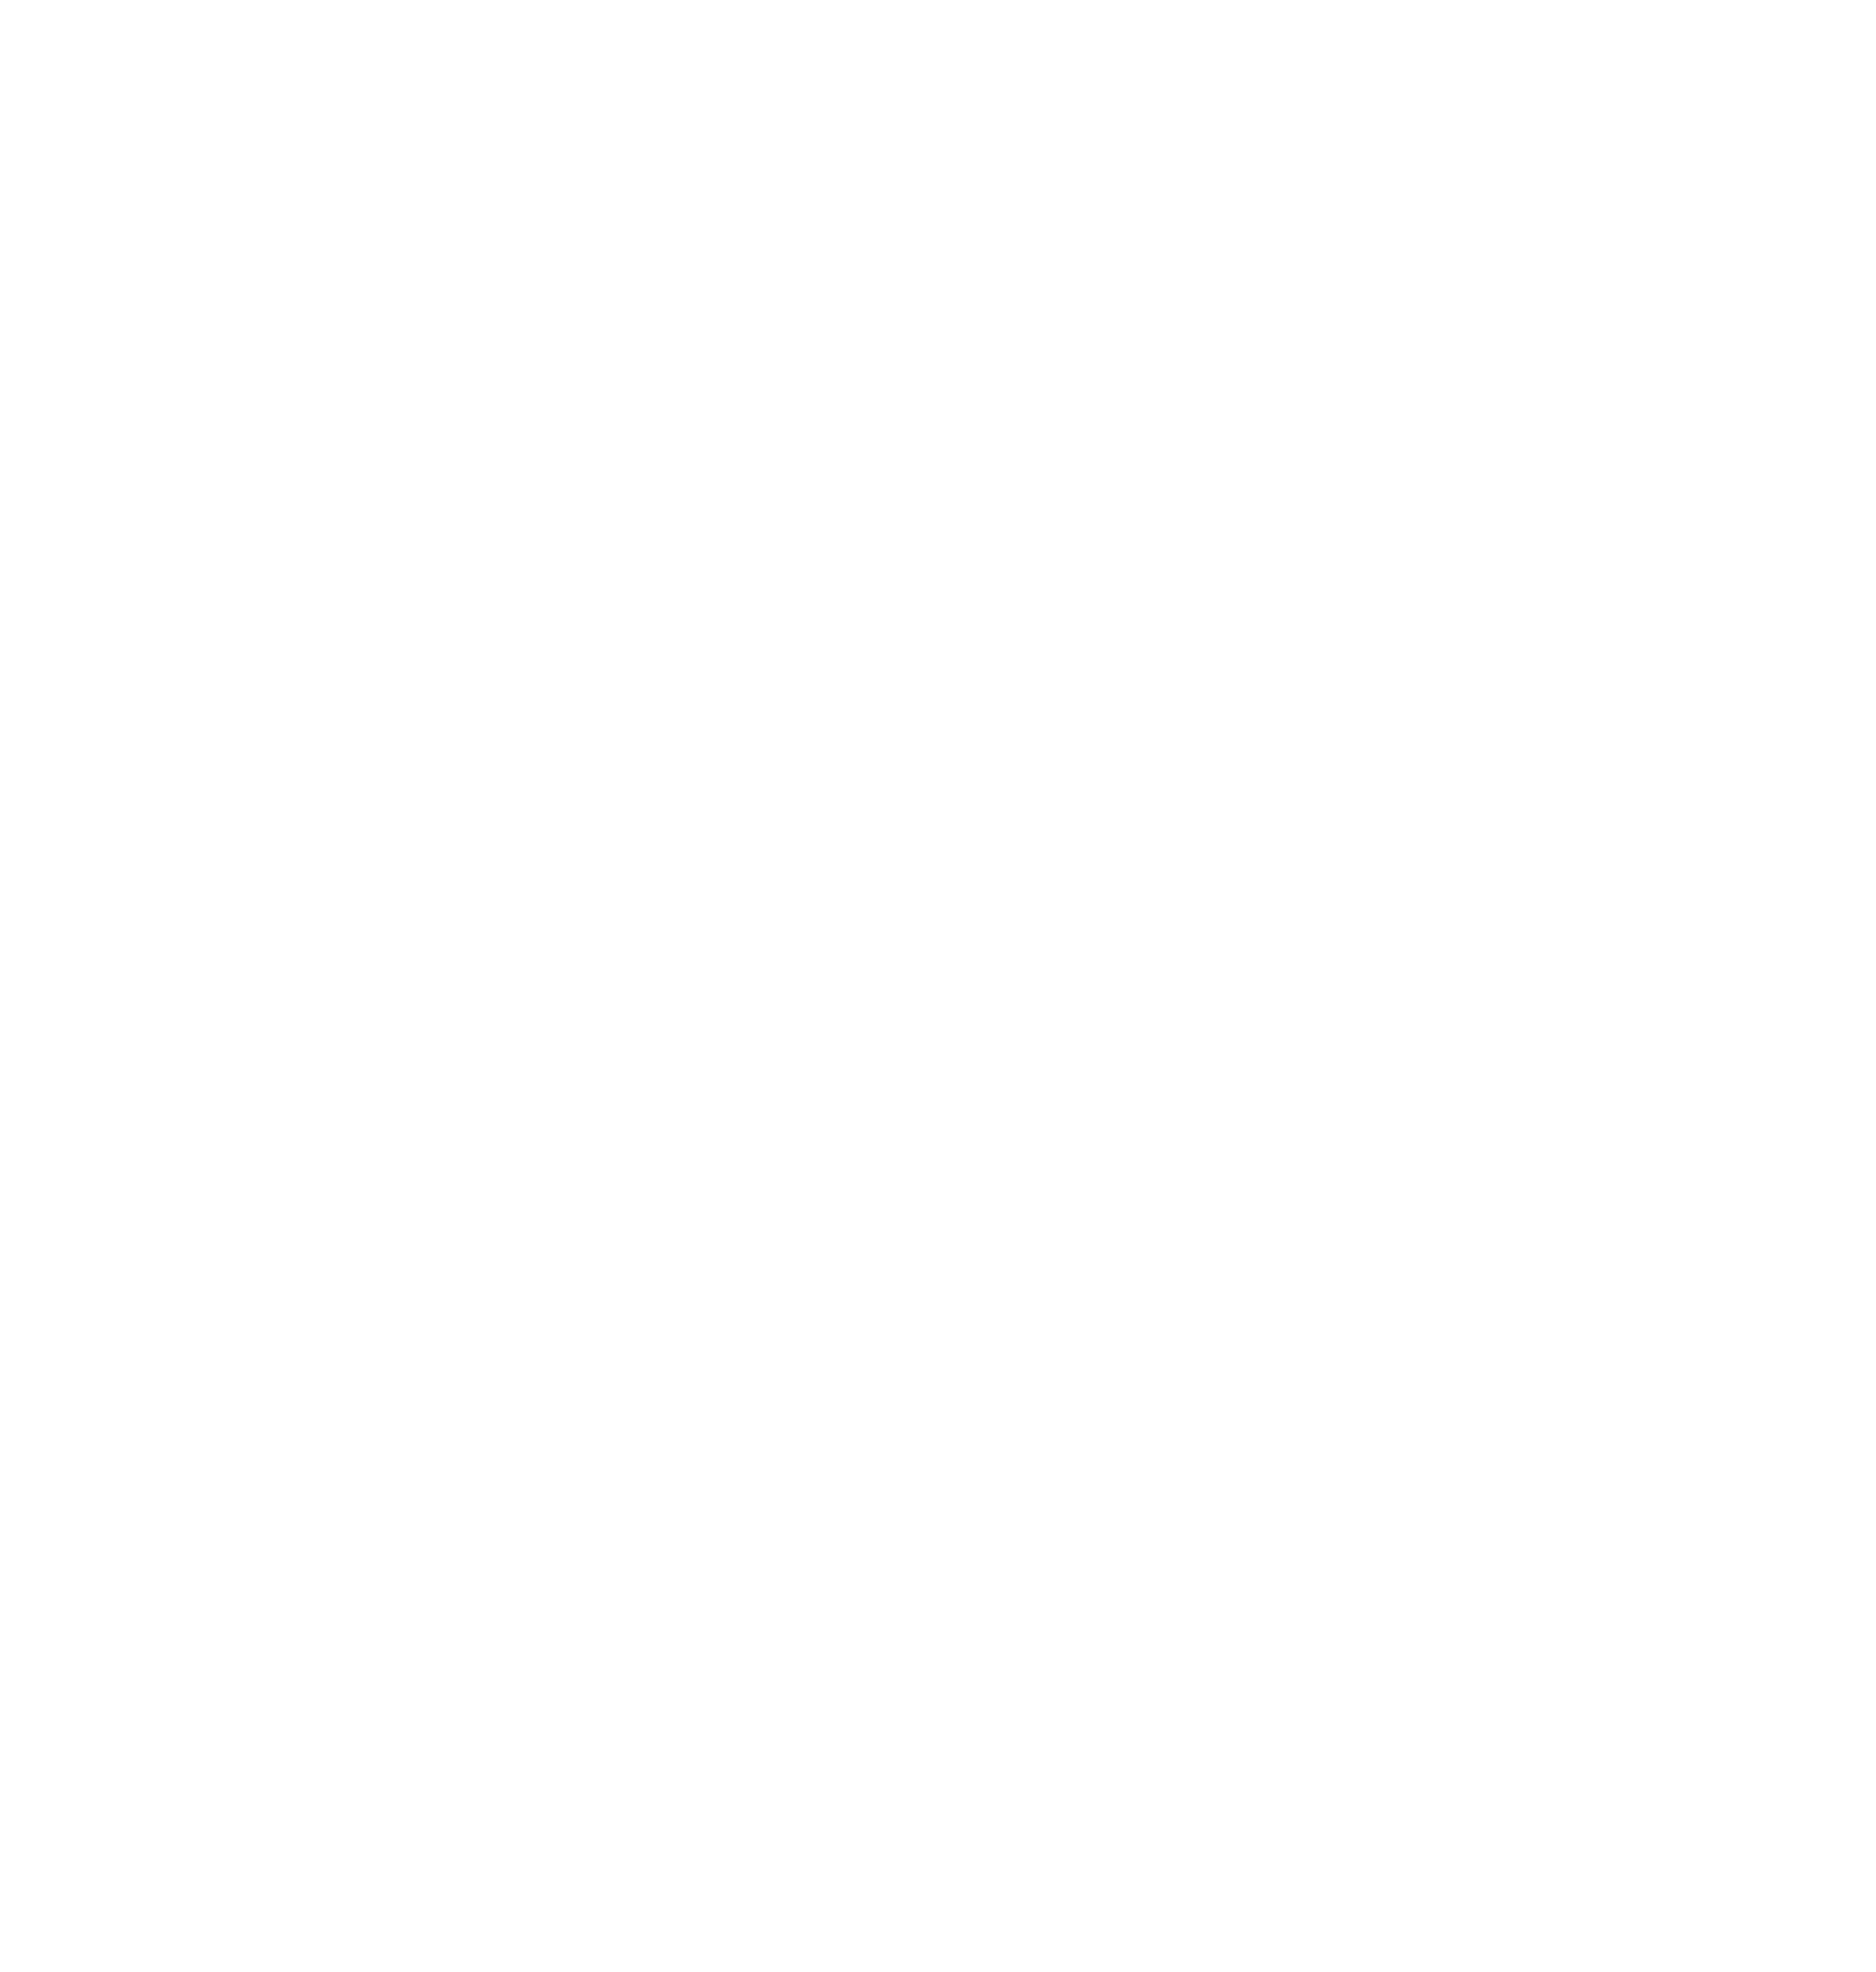 Herr Pimock